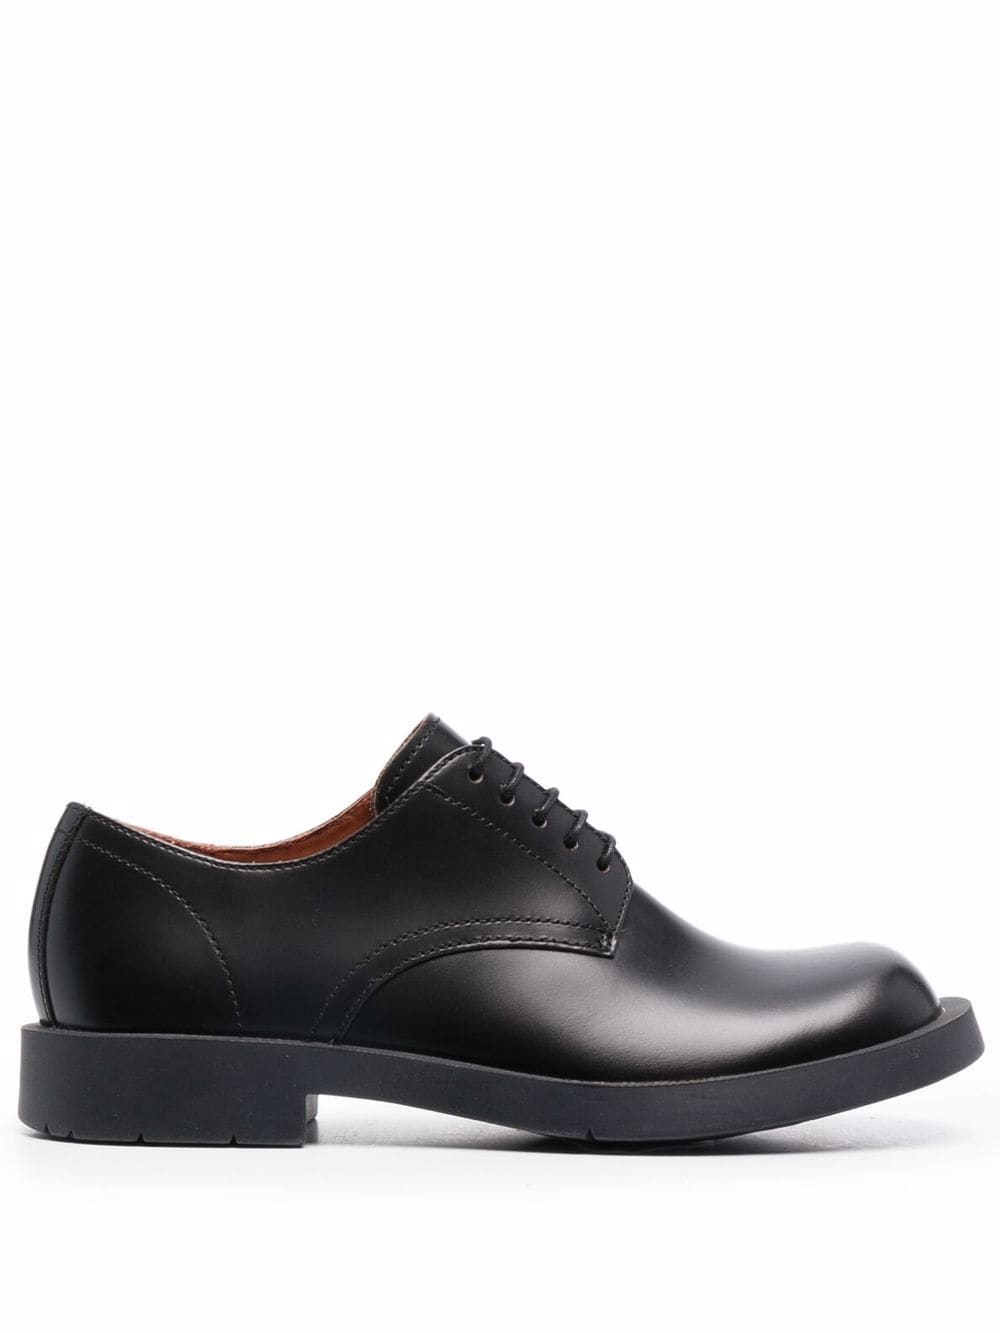 CamperLab leather Oxford shoes - Black von CamperLab